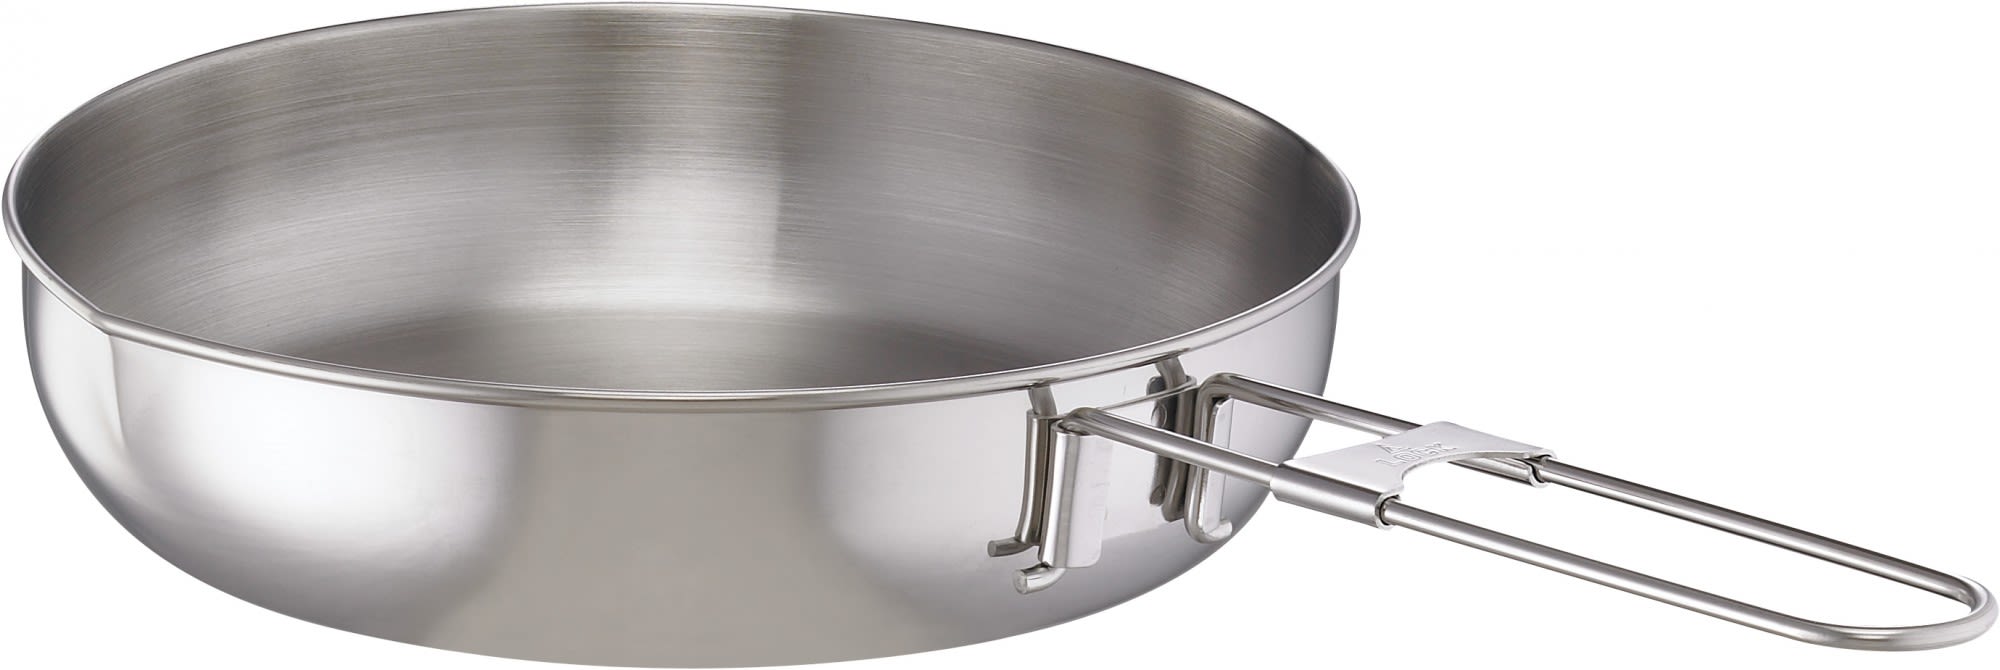 MSR Alpine FRY PAN Grau- Kocher-Zubehr- Grsse One Size - Farbe Silver unter MSR